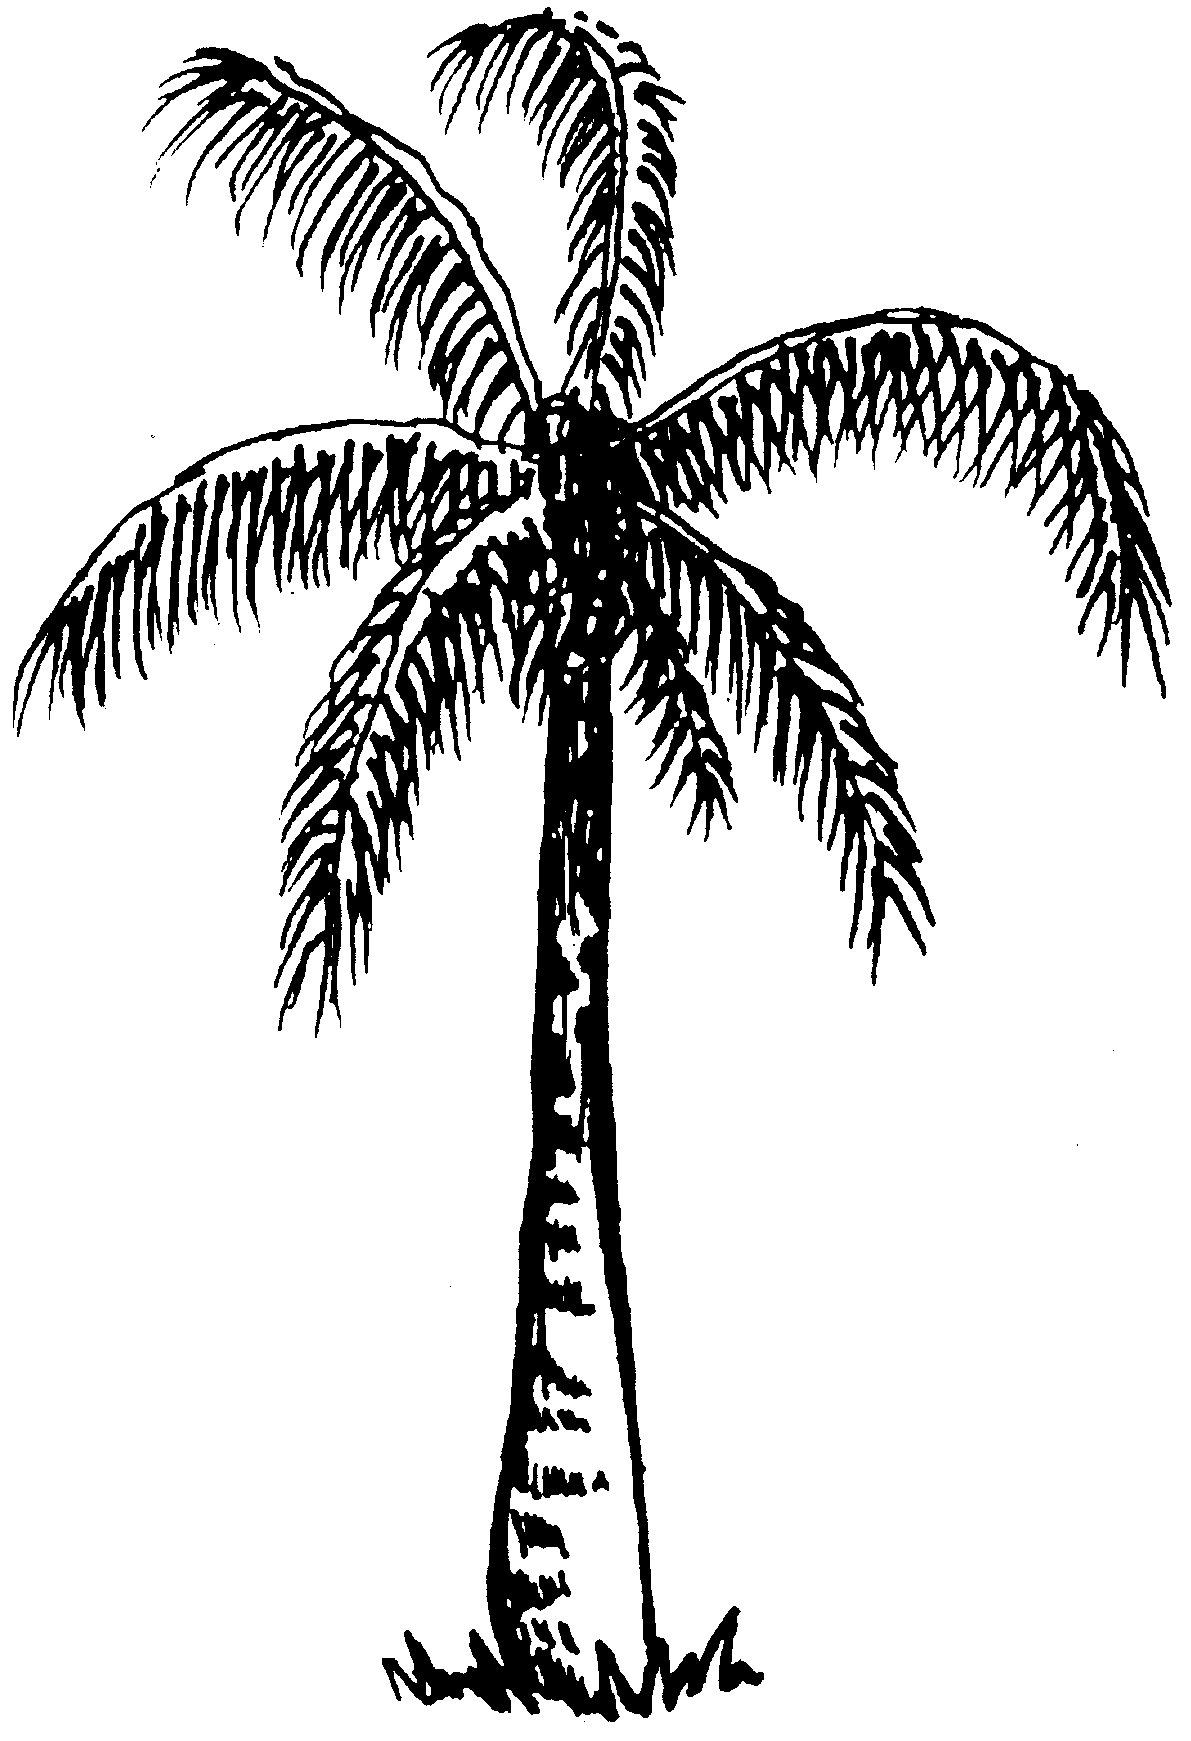 Black and white palm tree clip art